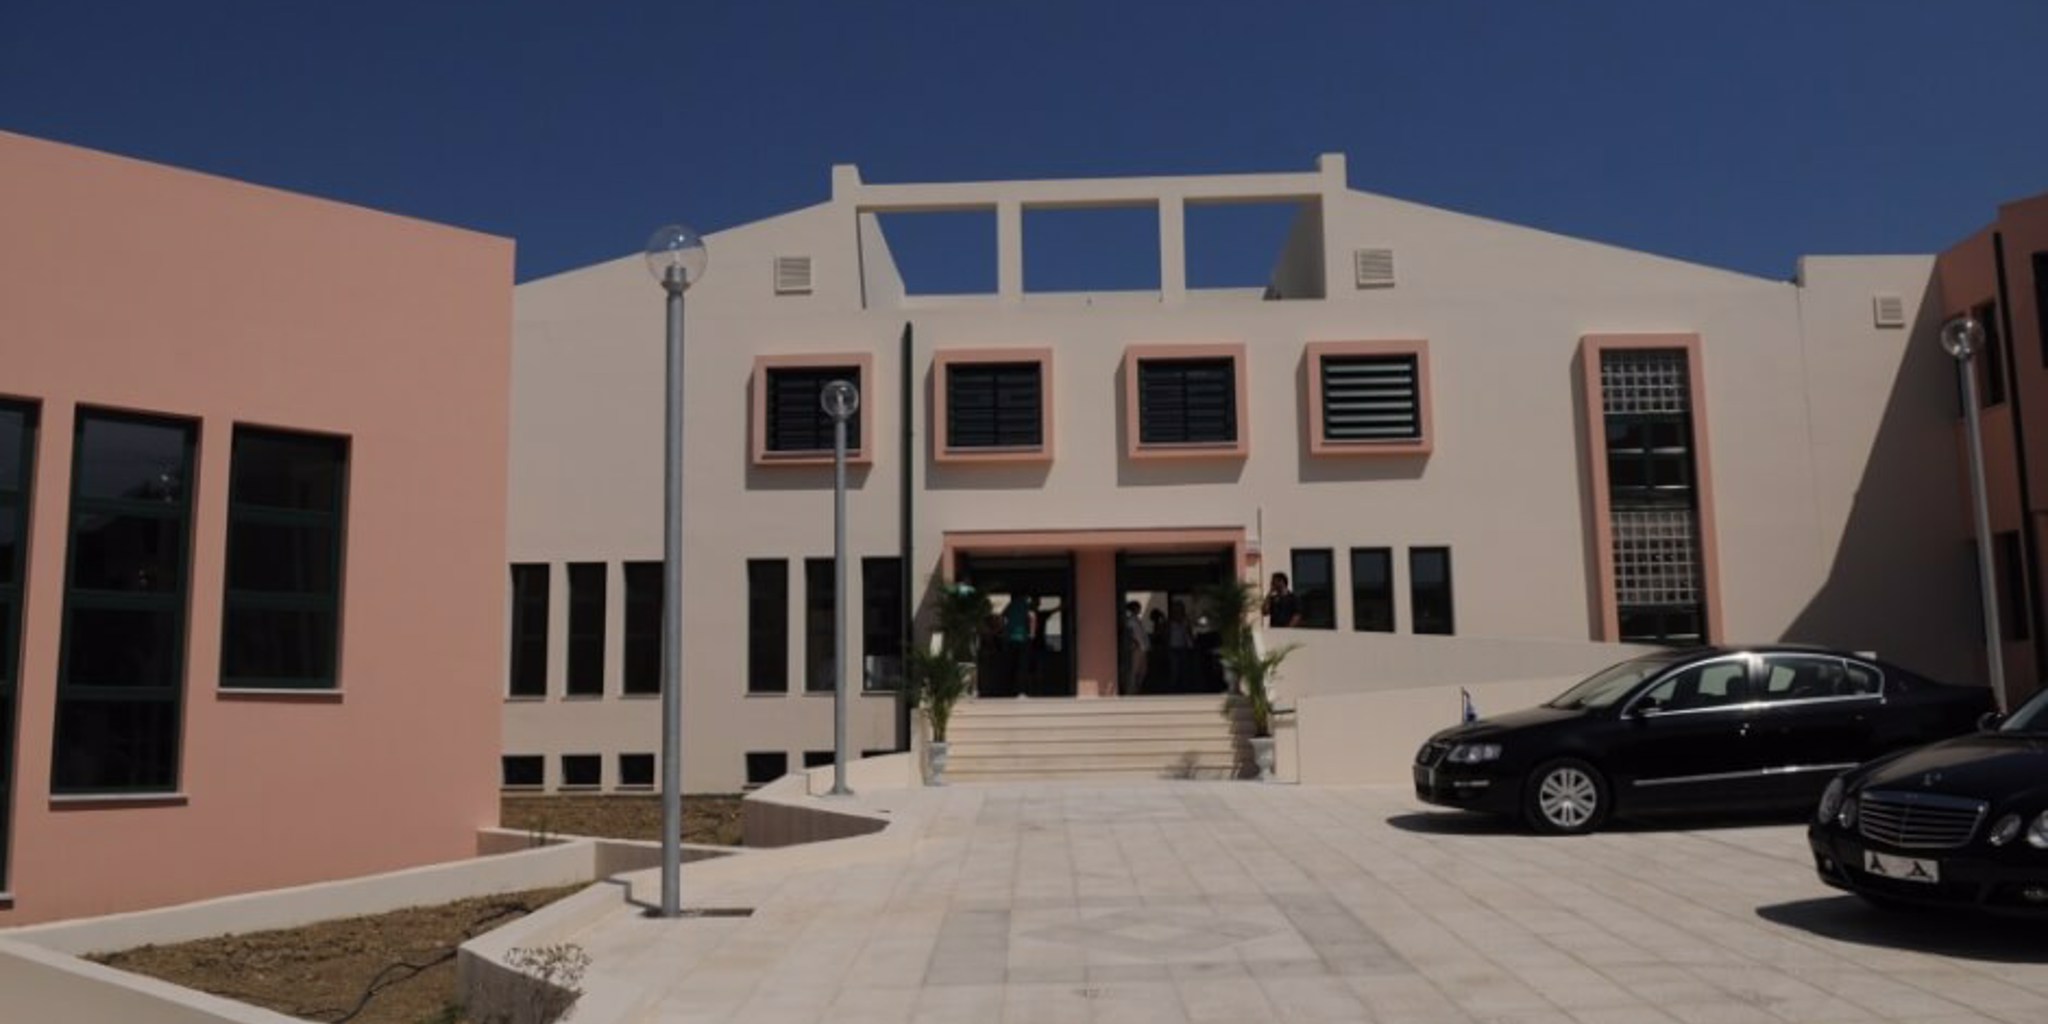 New student housing project in Zakynthos island